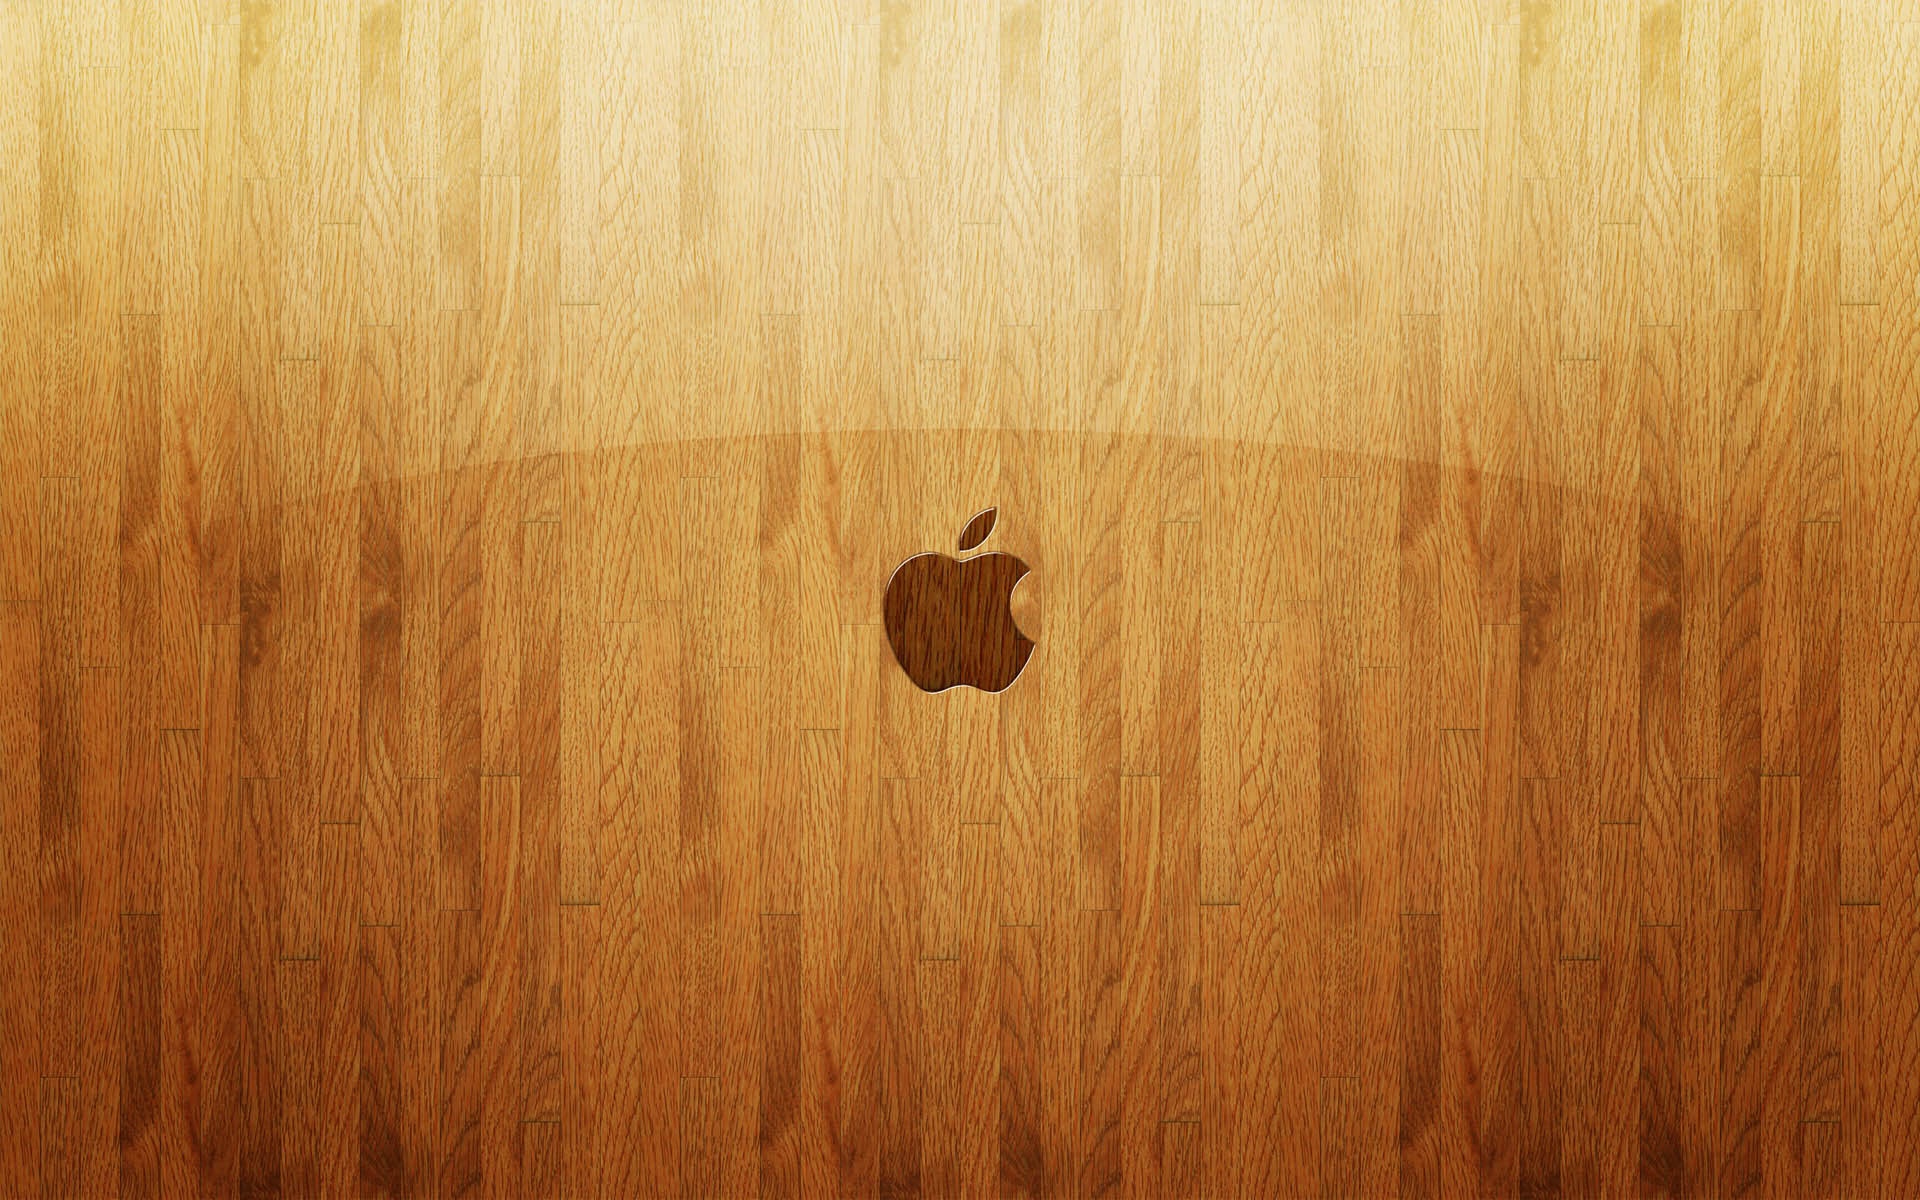 Apple Logo on Wood Background desktop wallpaper WallpaperPixel